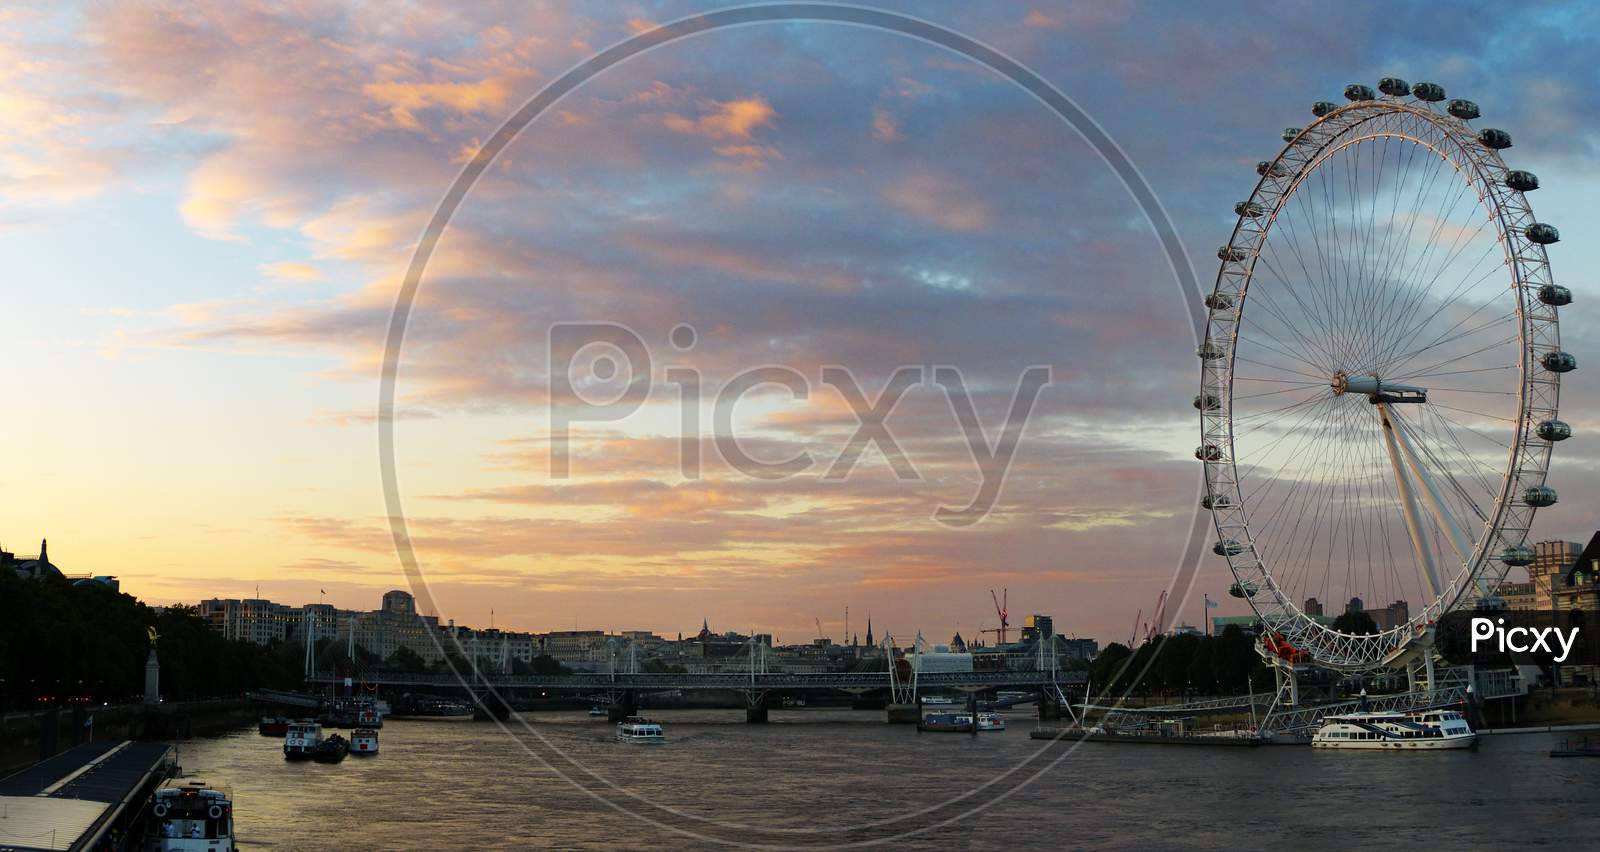 The London Eye at sunset.